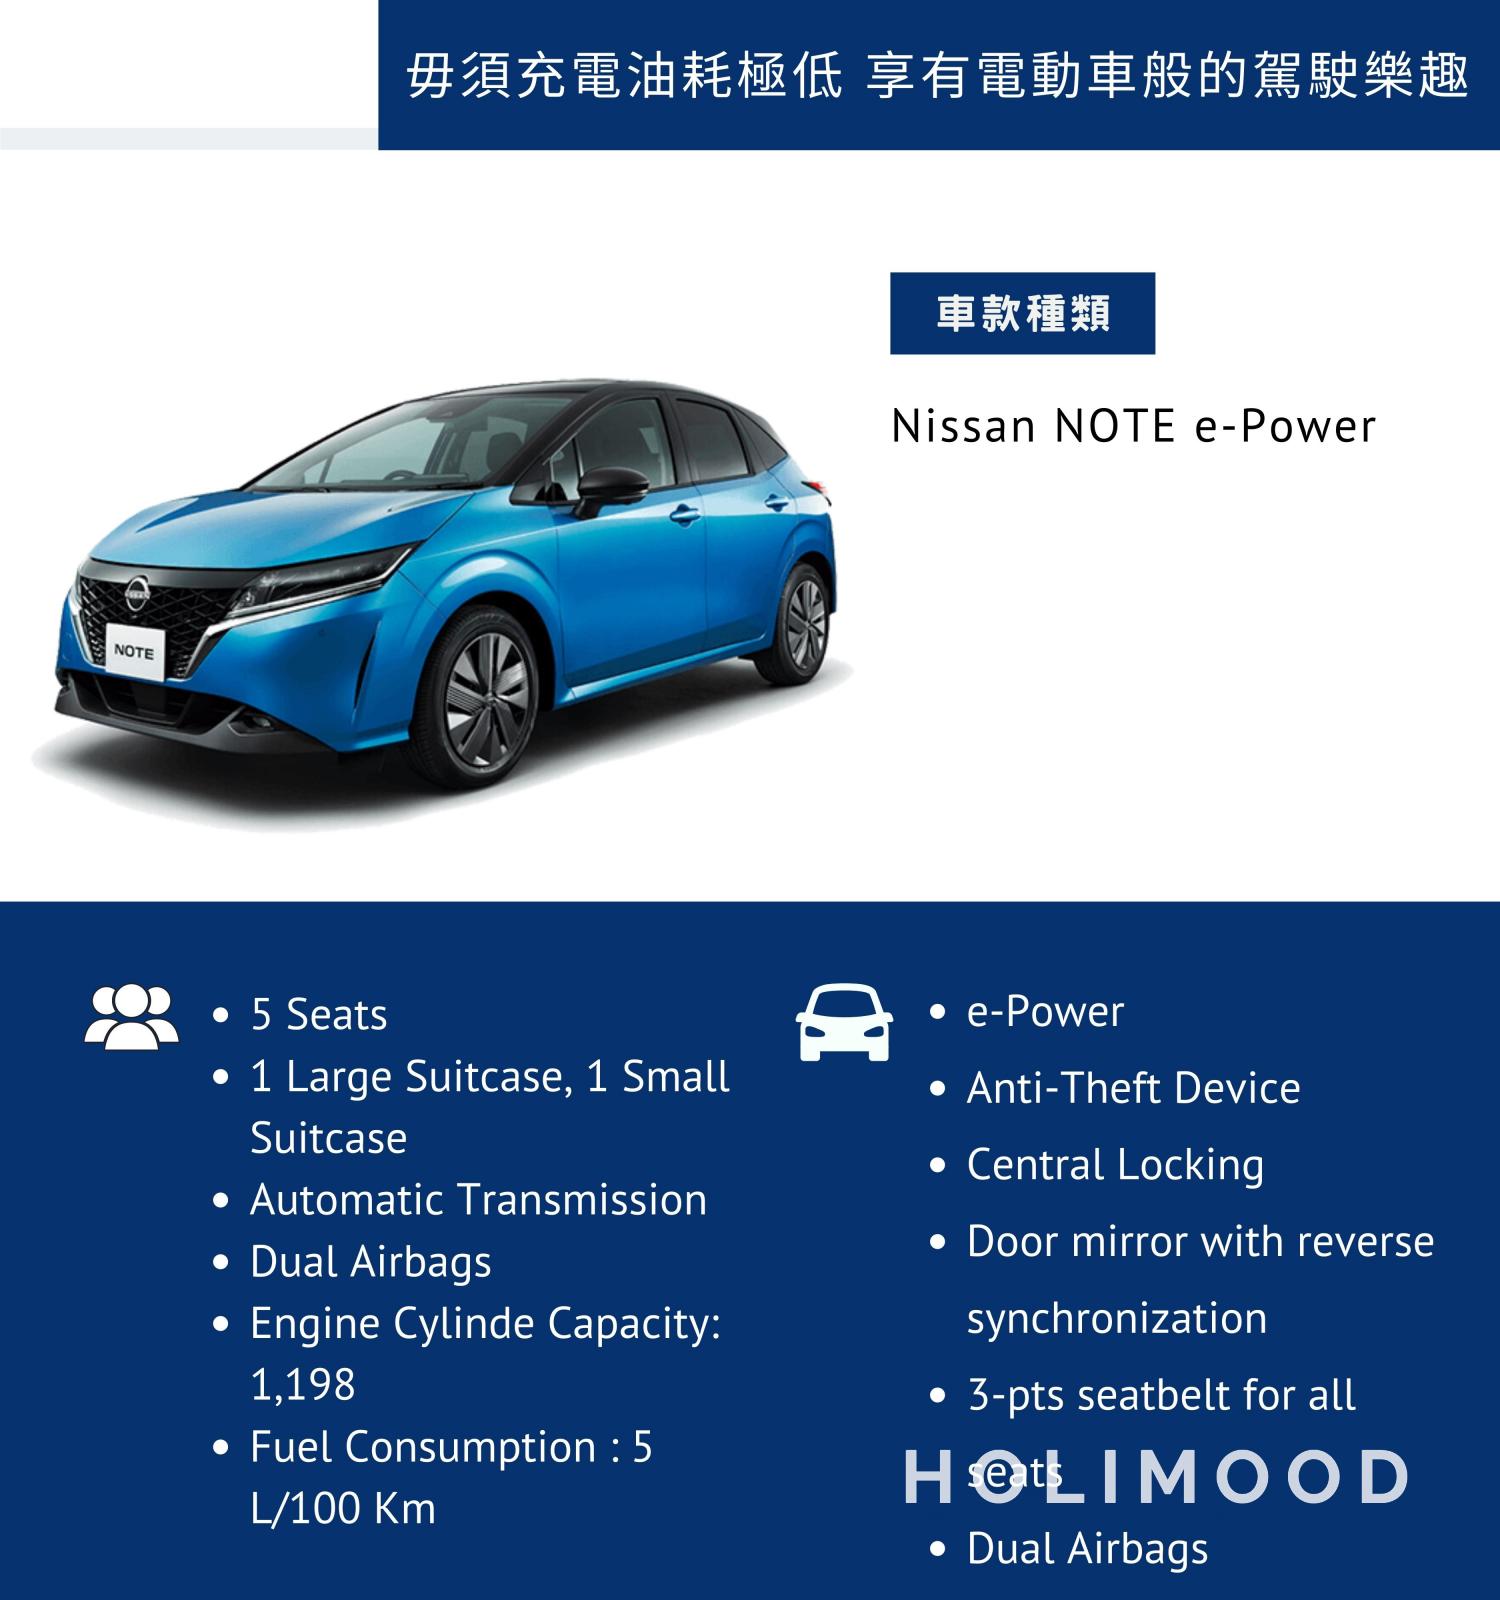 DCH Mobility Car Rent x Holimood Promotion 【毋須充電極低油耗】【五年內新車】Nissan NOTE e-Power - 高效能5人車 (日租) 2